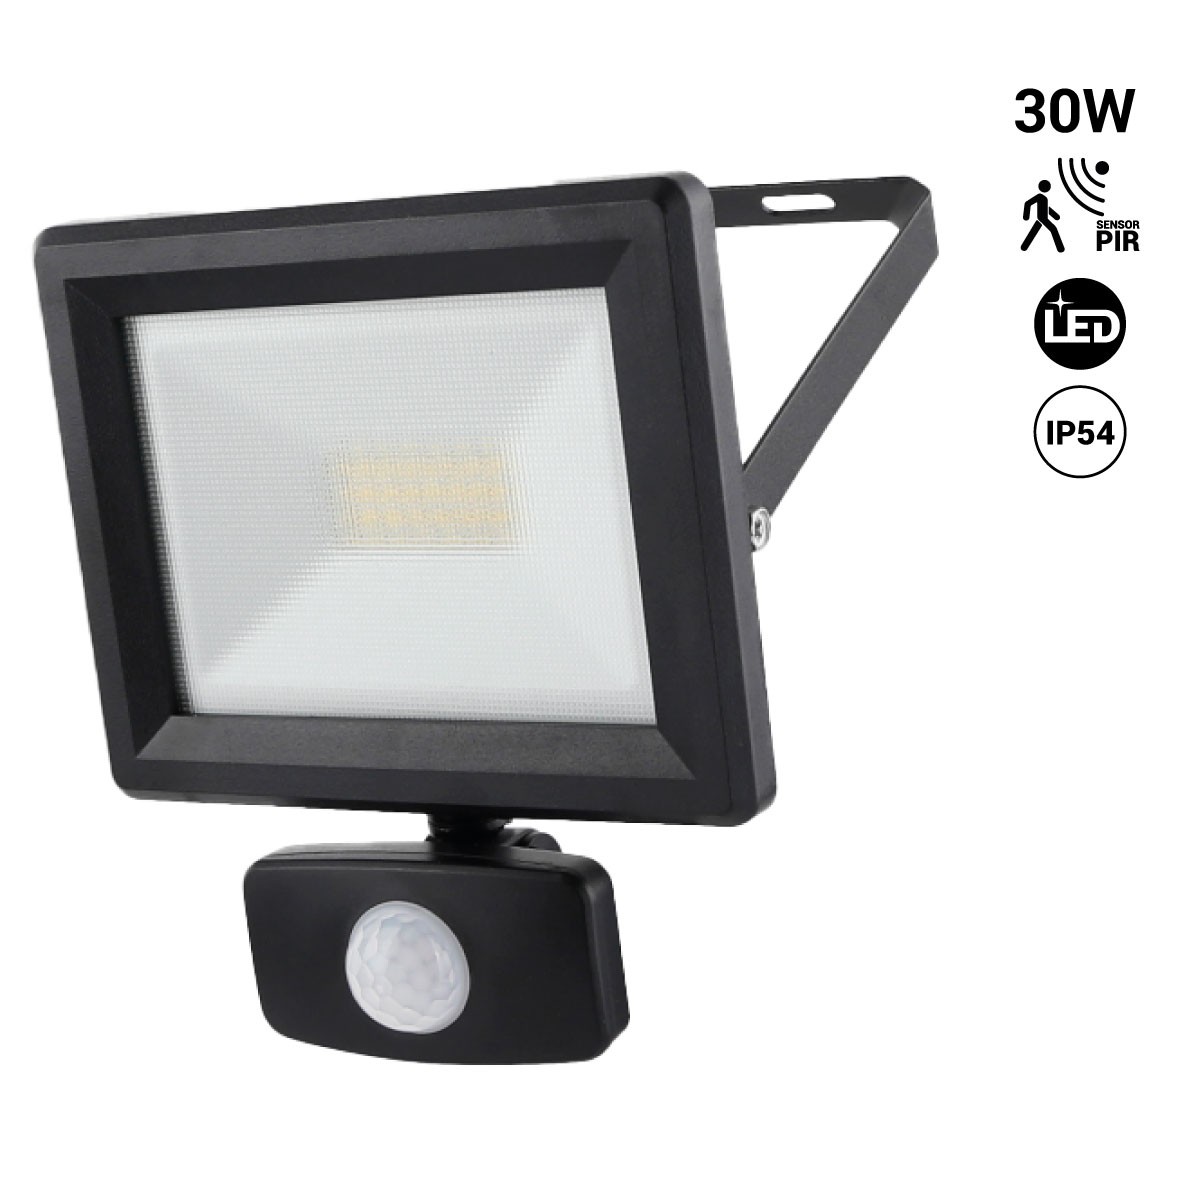 Outdoor LED Floodlight with PIR Sensor - 30W - IP54 - 120º - 4000K